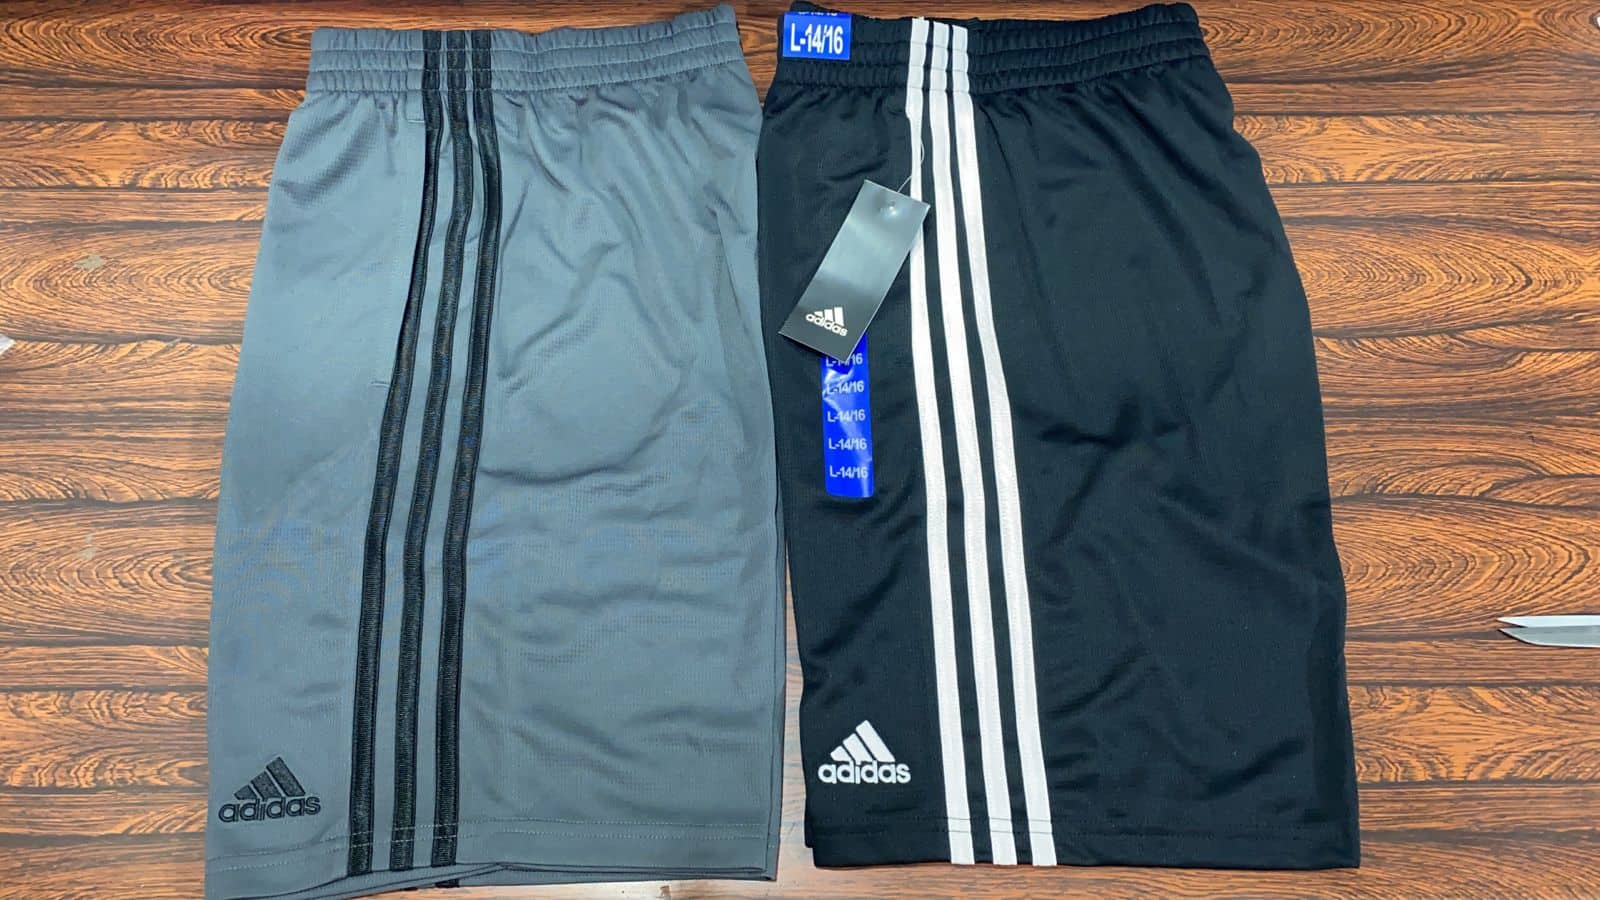 Kit Shorts Adidas - 14/16 anos - R$ 199,90